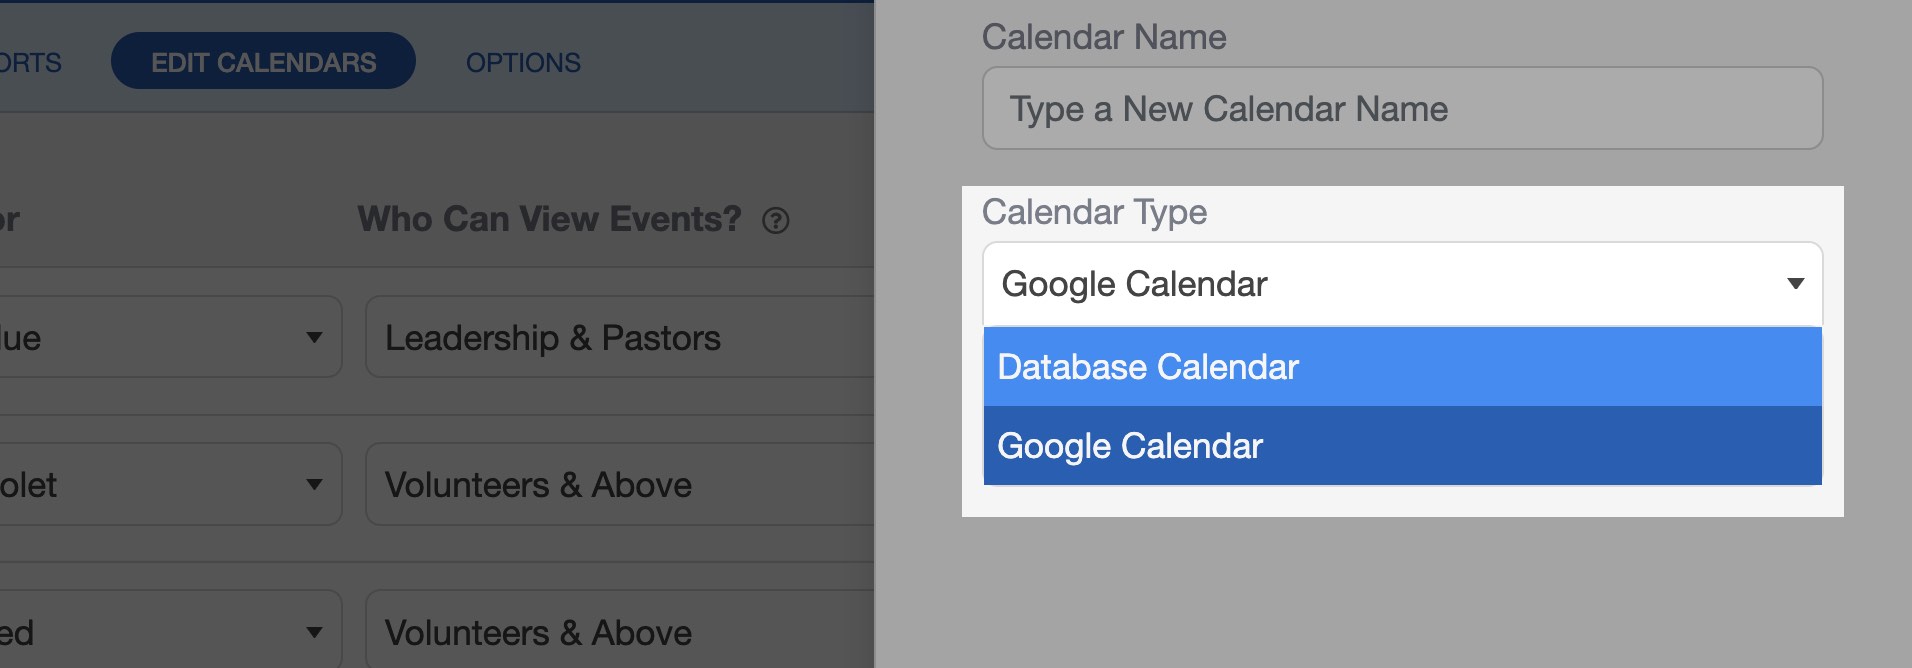 Adding a Google Calendar